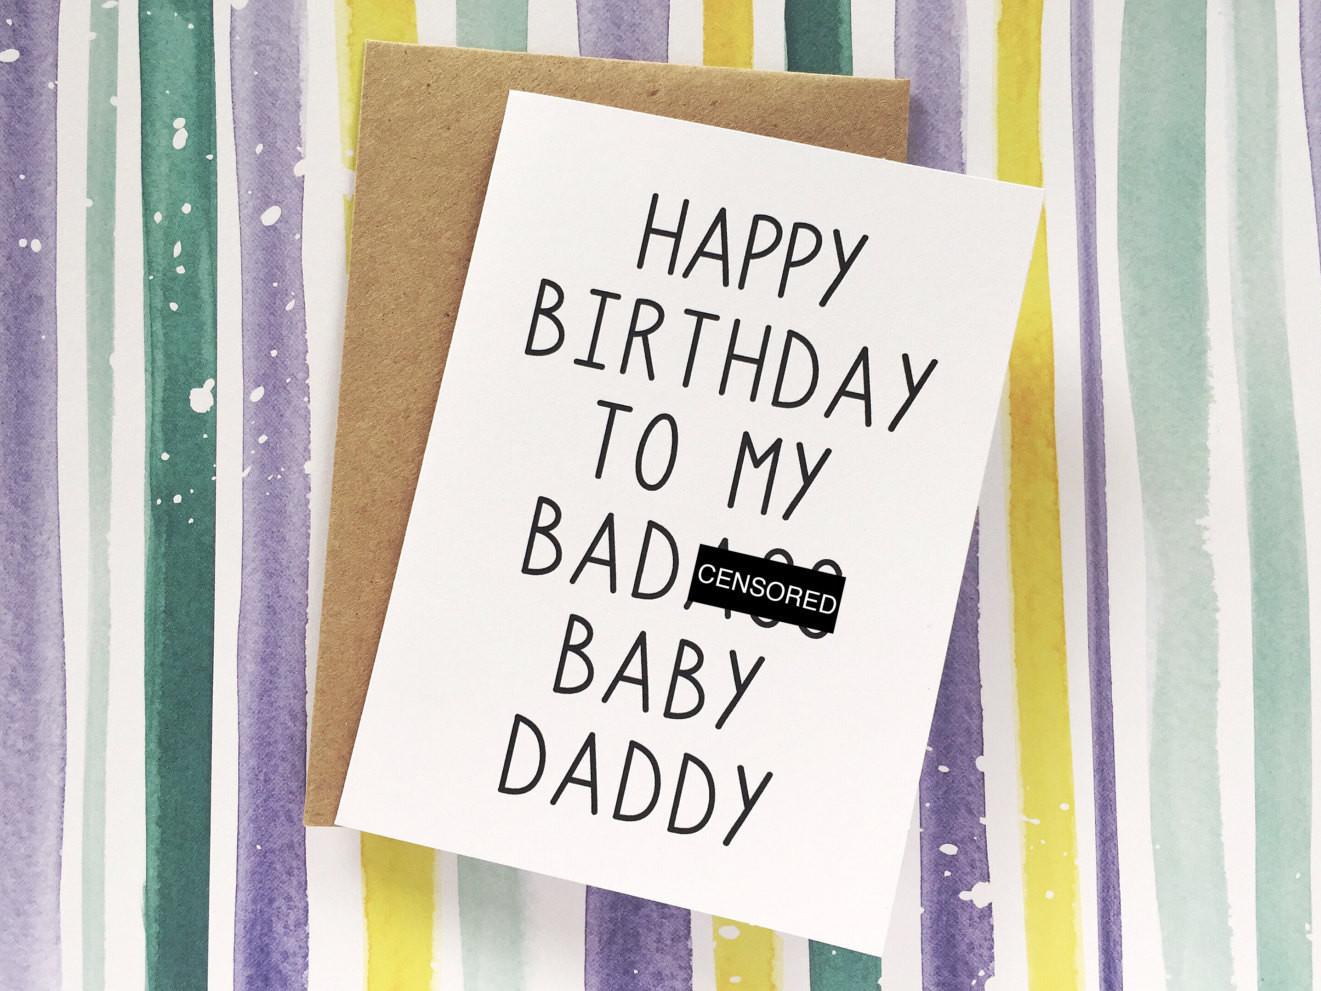 Funny Happy Birthday Daddy
 Funny Baby Daddy Card Husband Birthday Card Happy BIRTHDAY